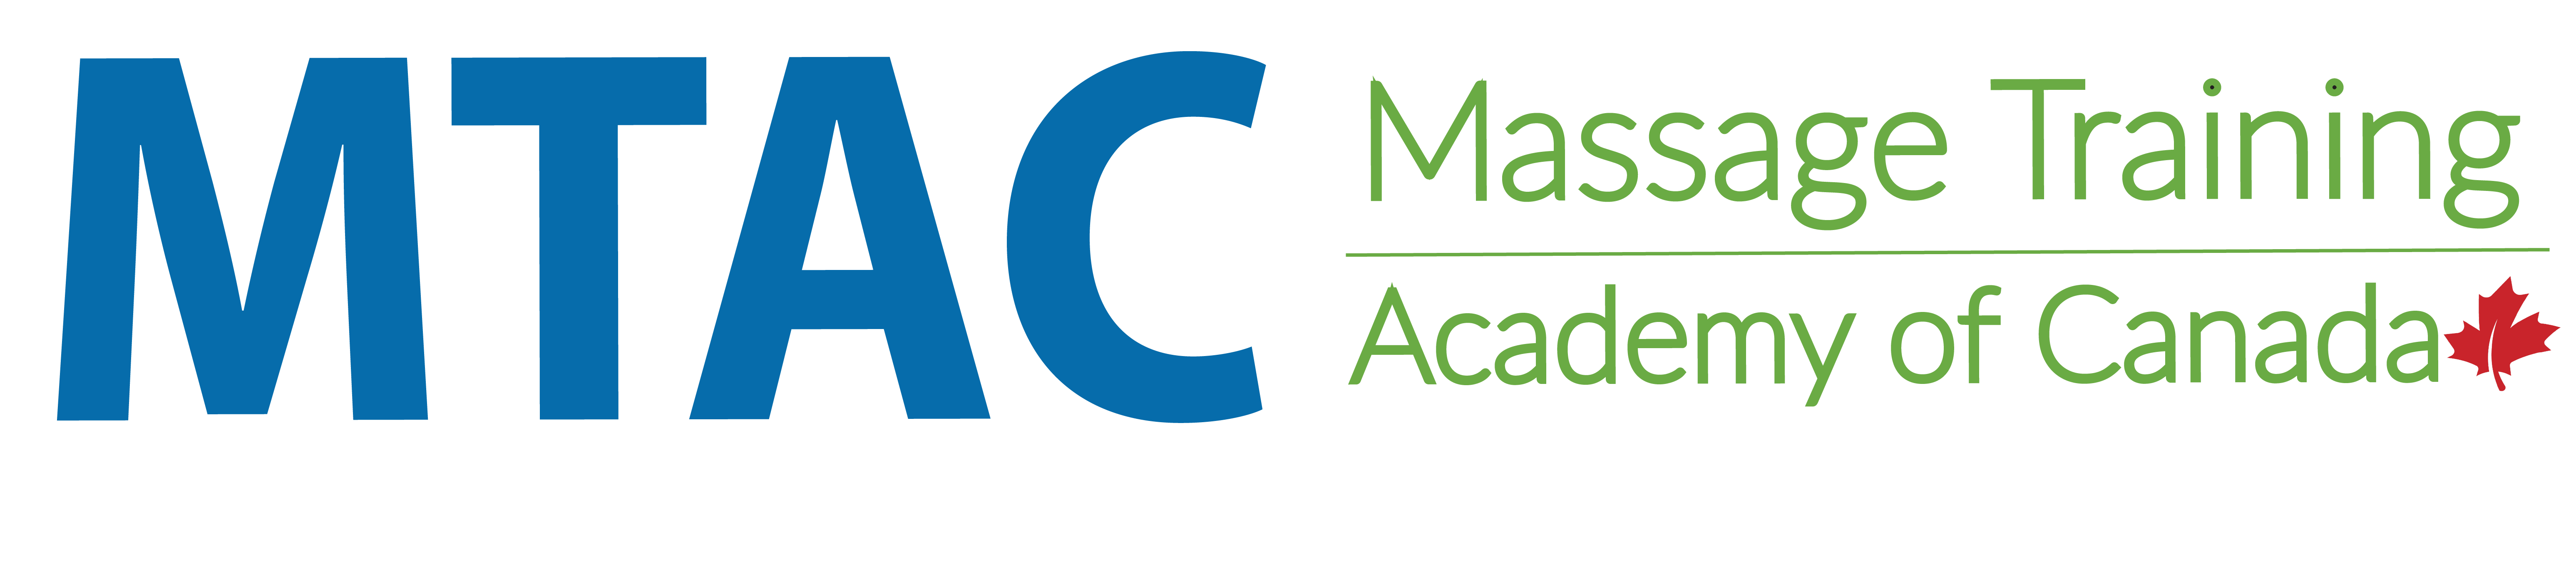 Massage Training Academy logo